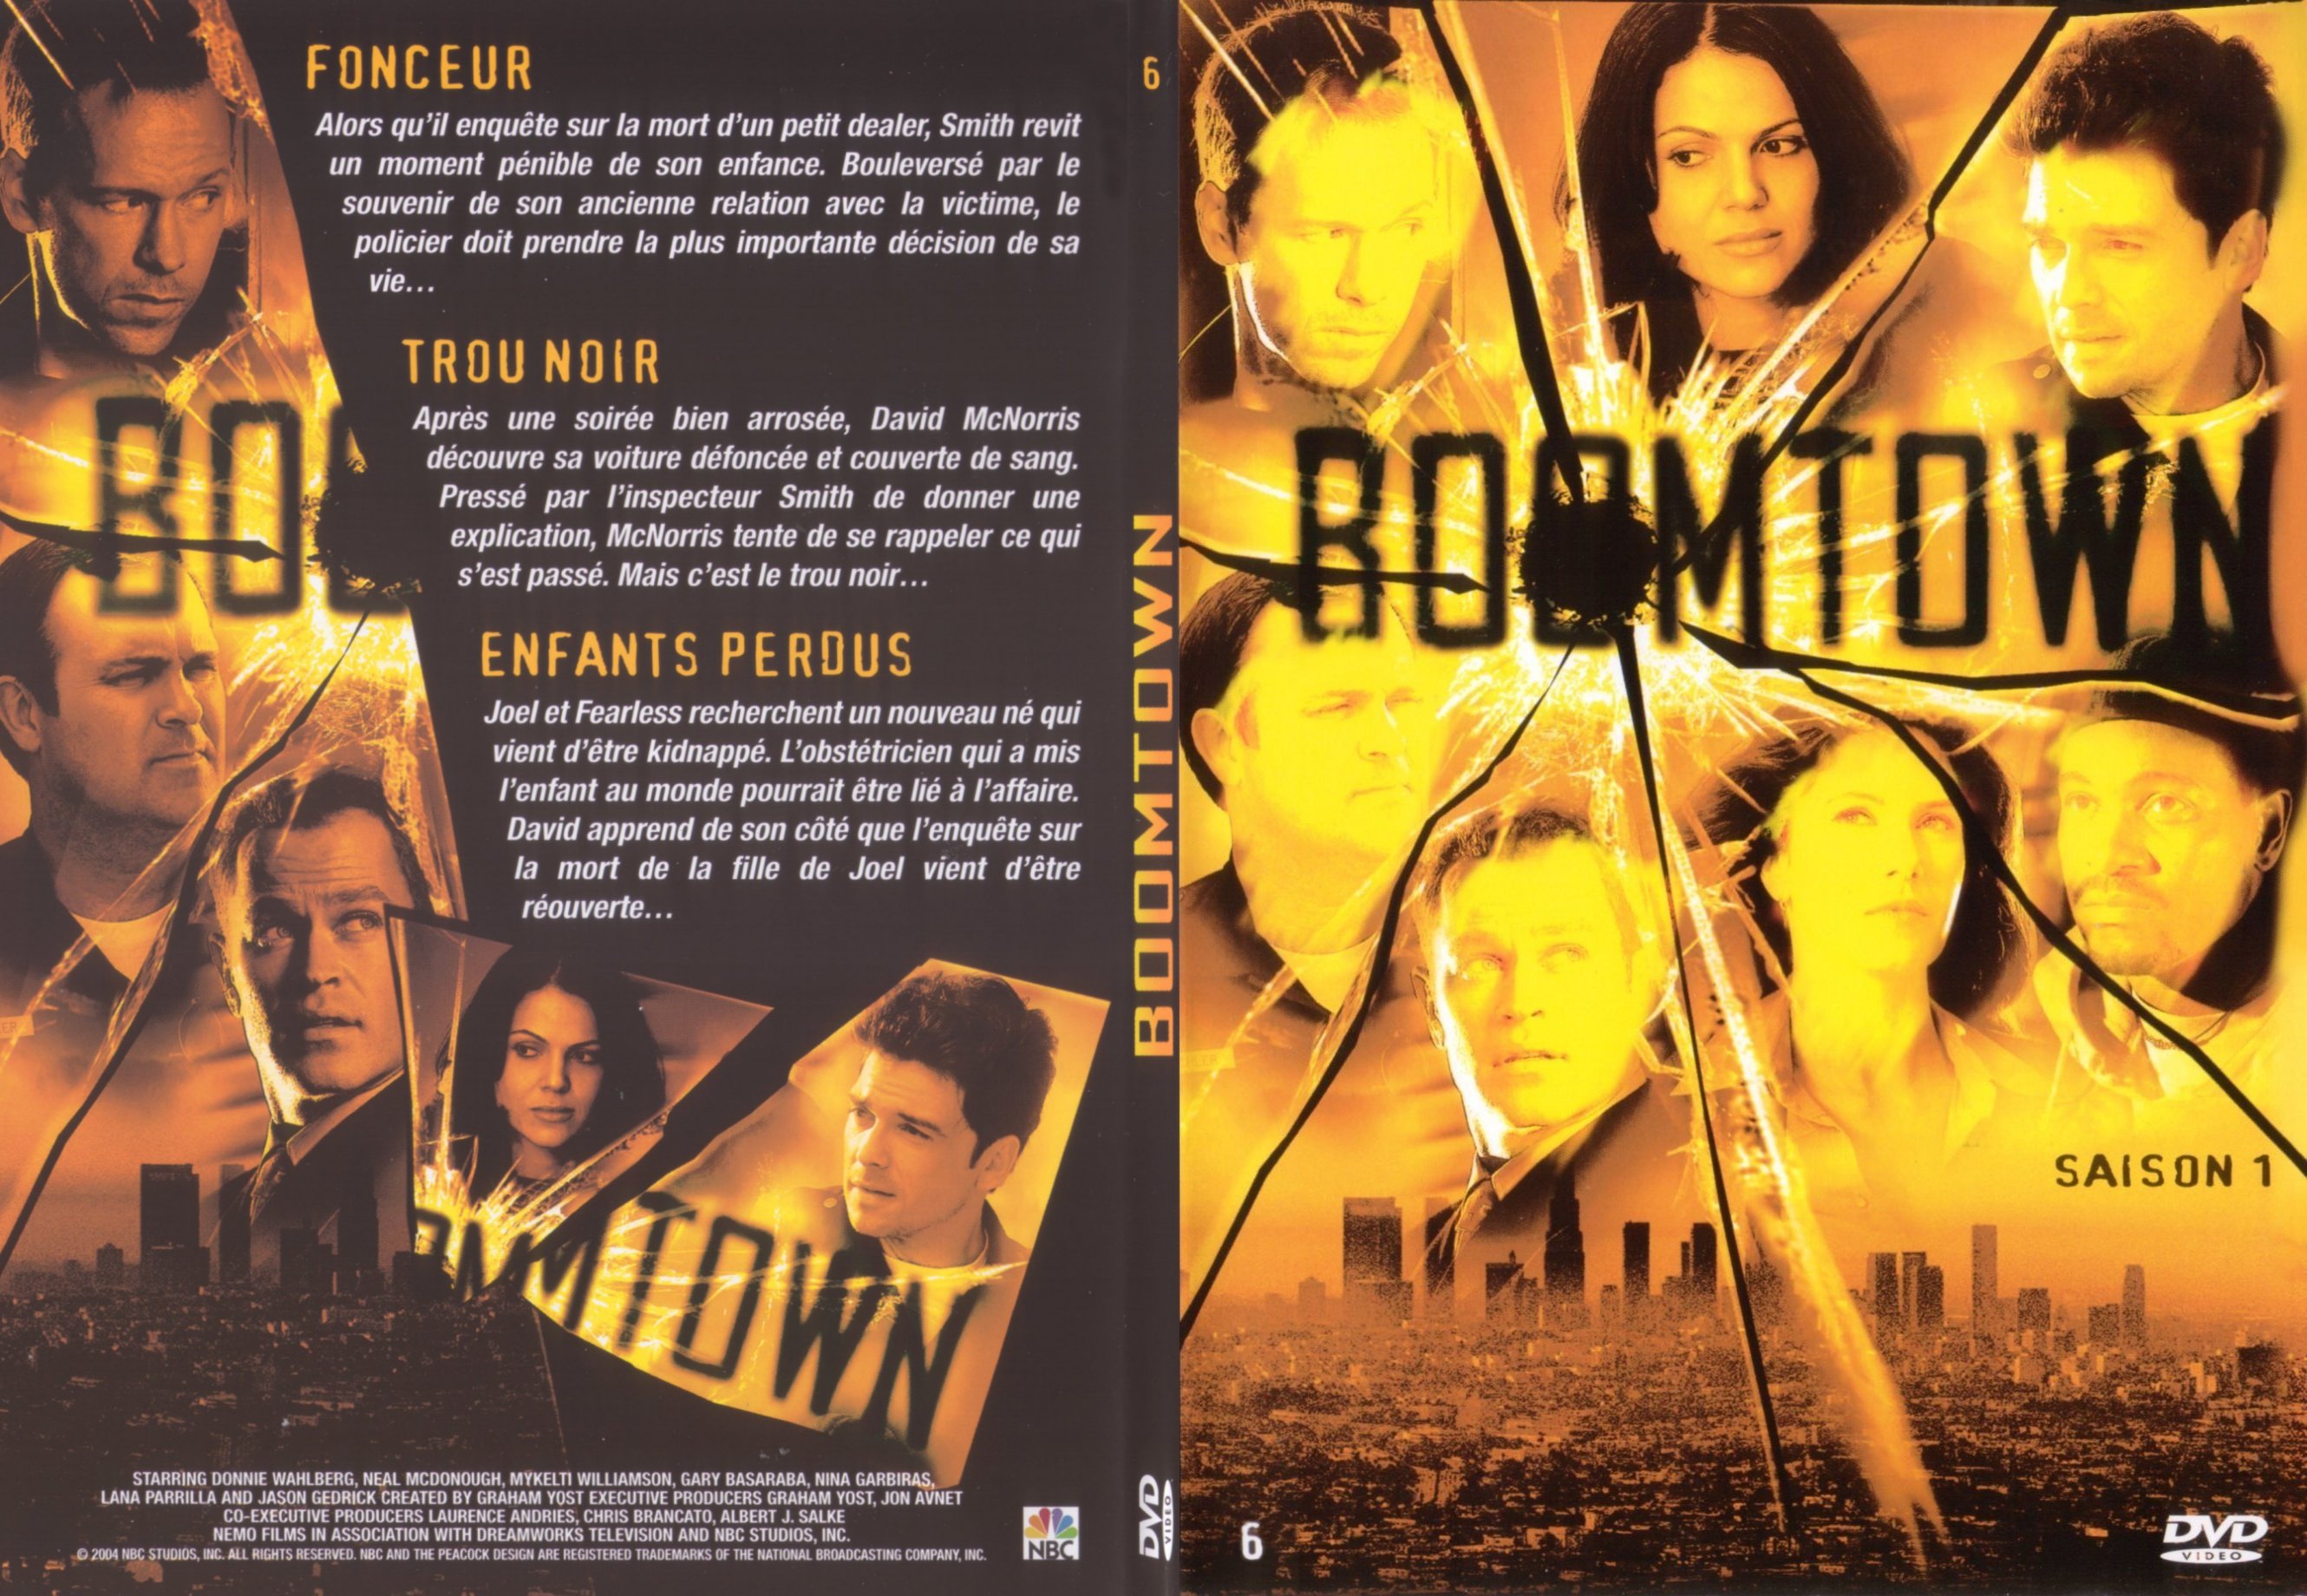 Jaquette DVD Boomtown Saison 1 DVD 6